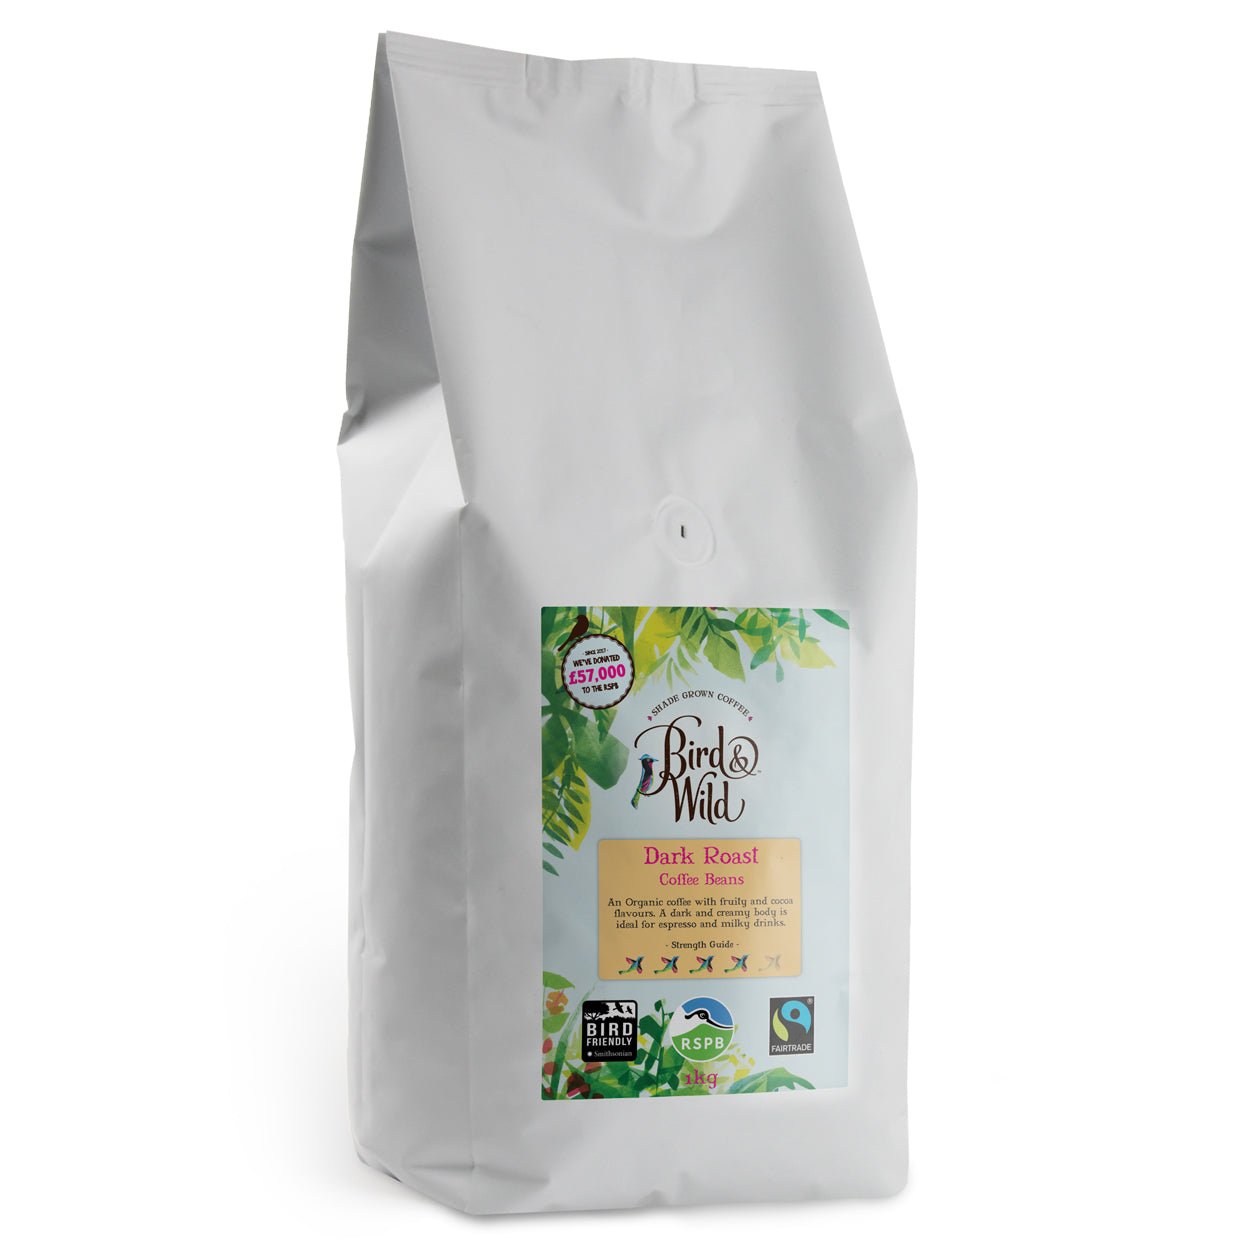 Dark Roast Fairtrade Organic Bird Friendly RSPB Coffee - Bird & Wild Coffee